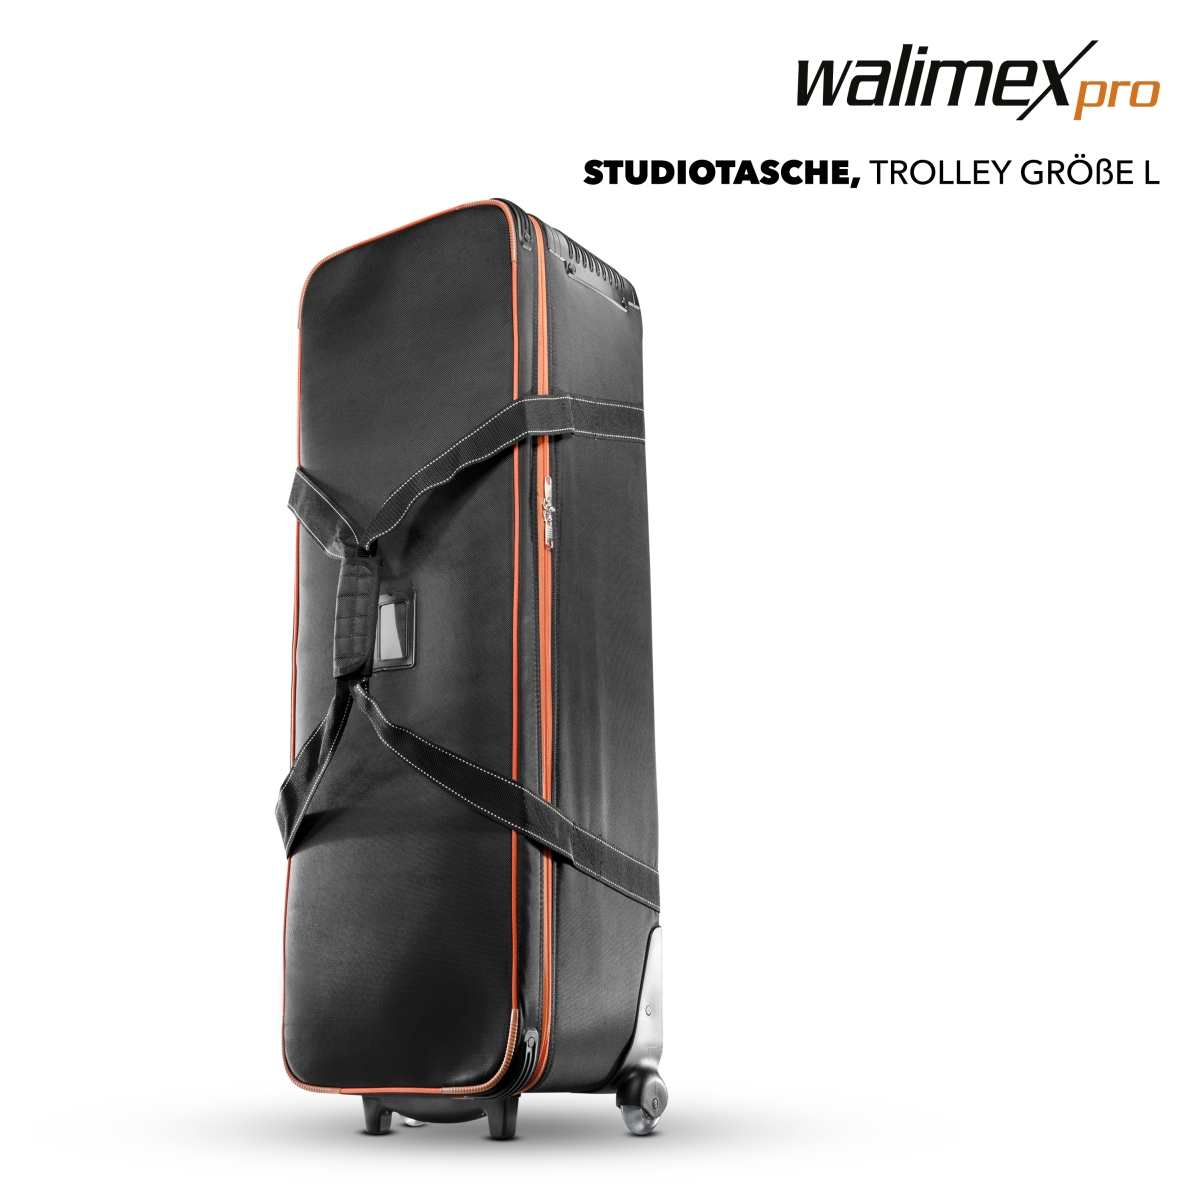 Walimex pro Studio Bag, Trolley Size L